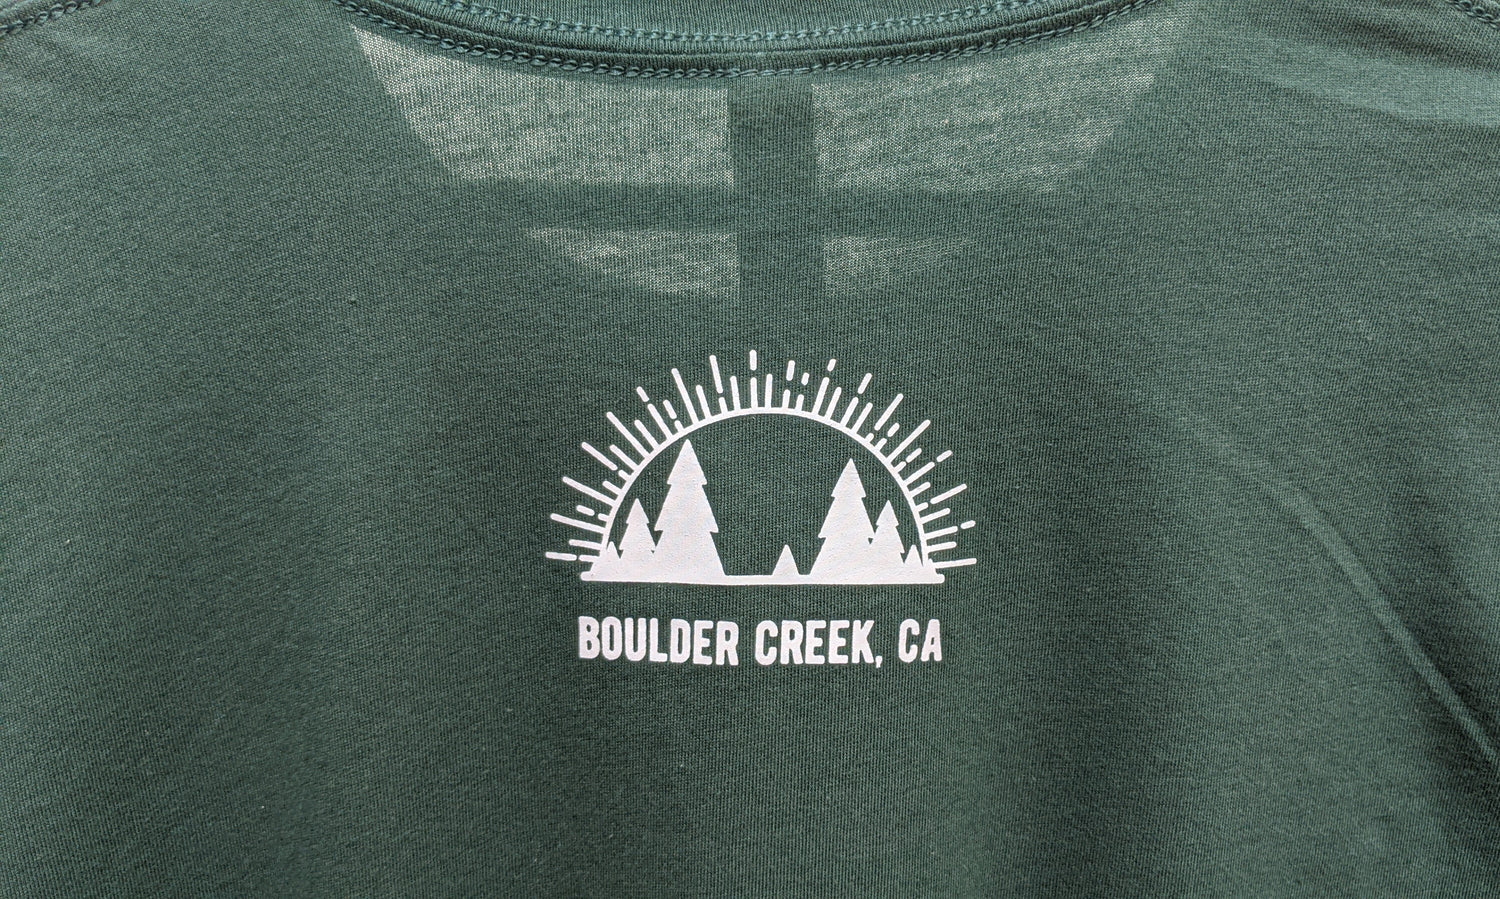 Present Boulder Creek logo mark